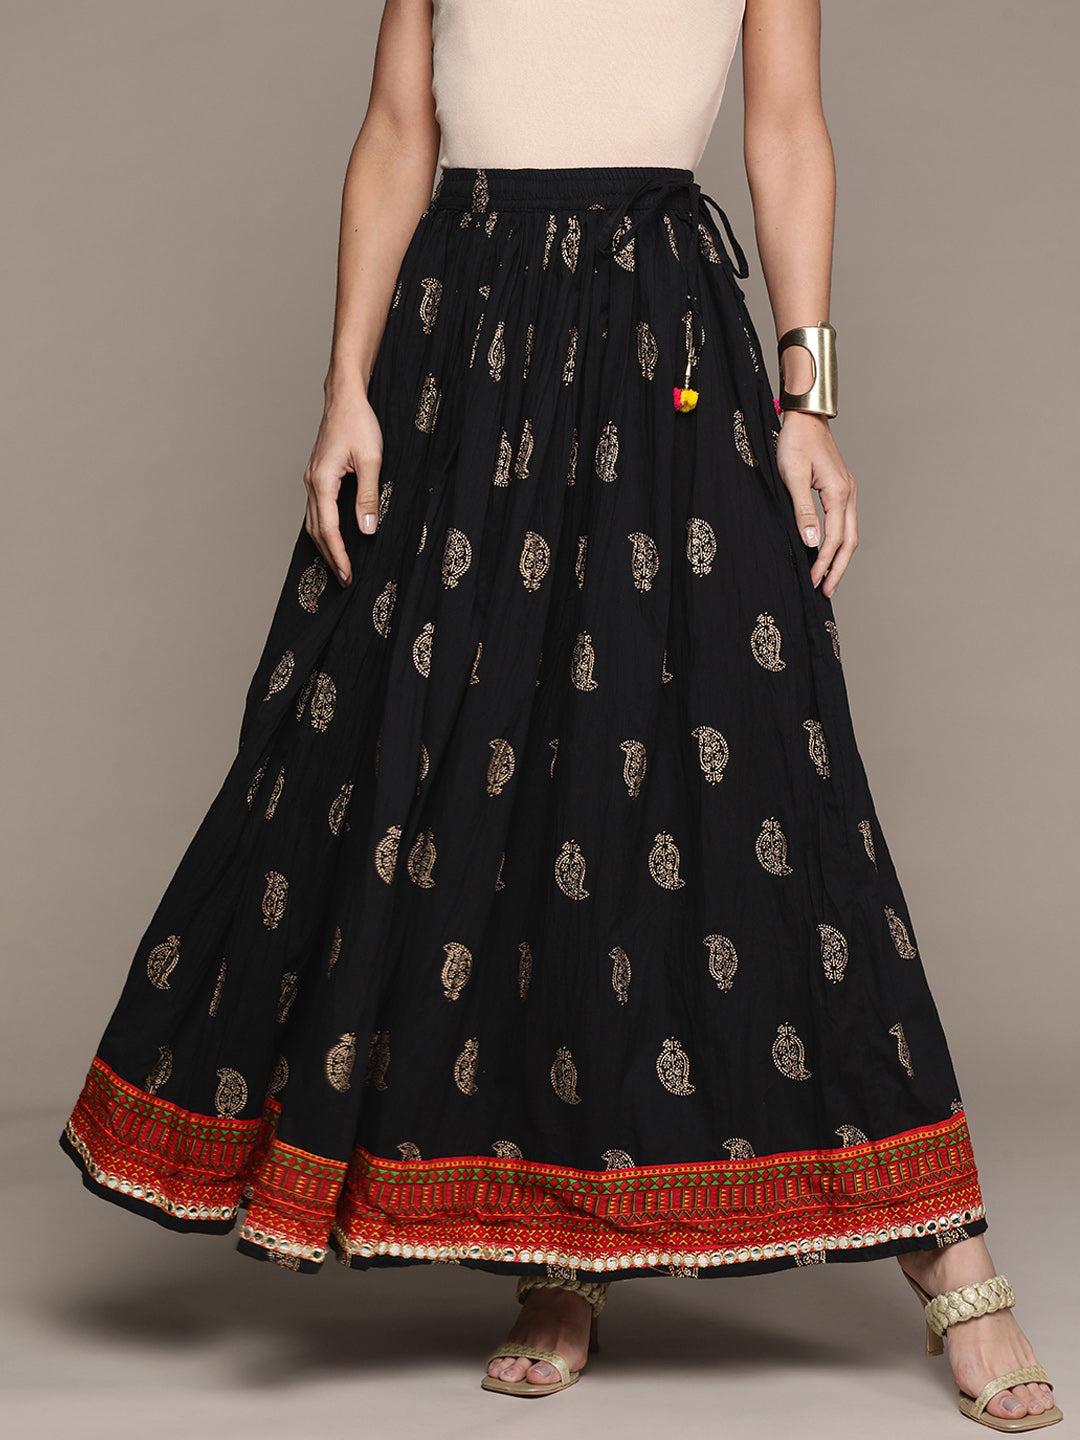 Ishin Women's Cotton Black Foil Printed With Mirror Embellish Flared Maxi Skirt